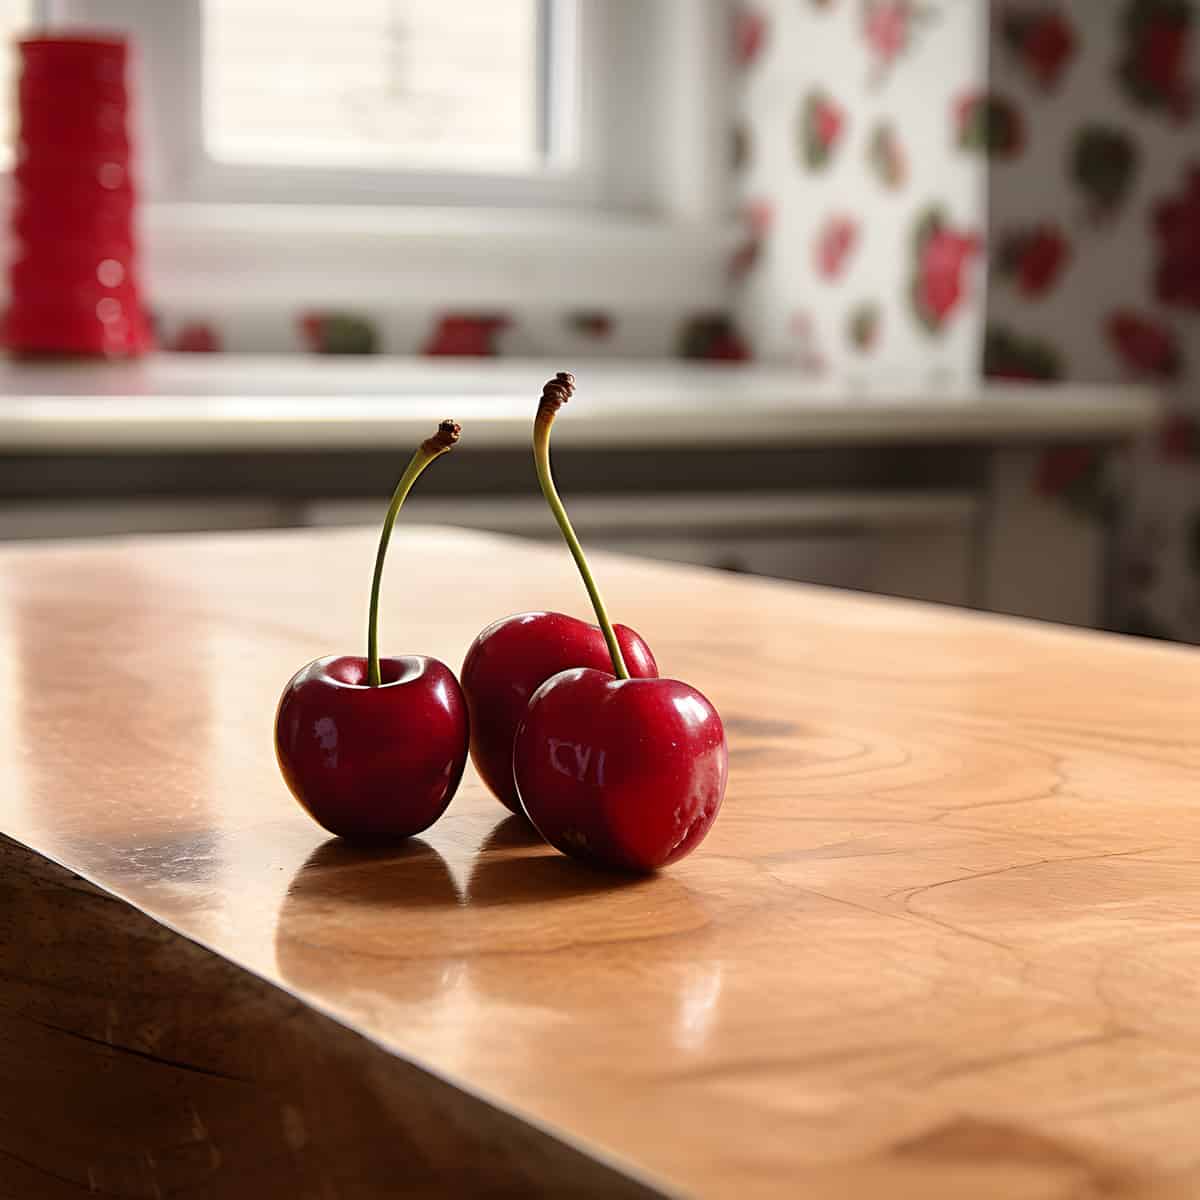 Spanish Cherries on a kitchen counter